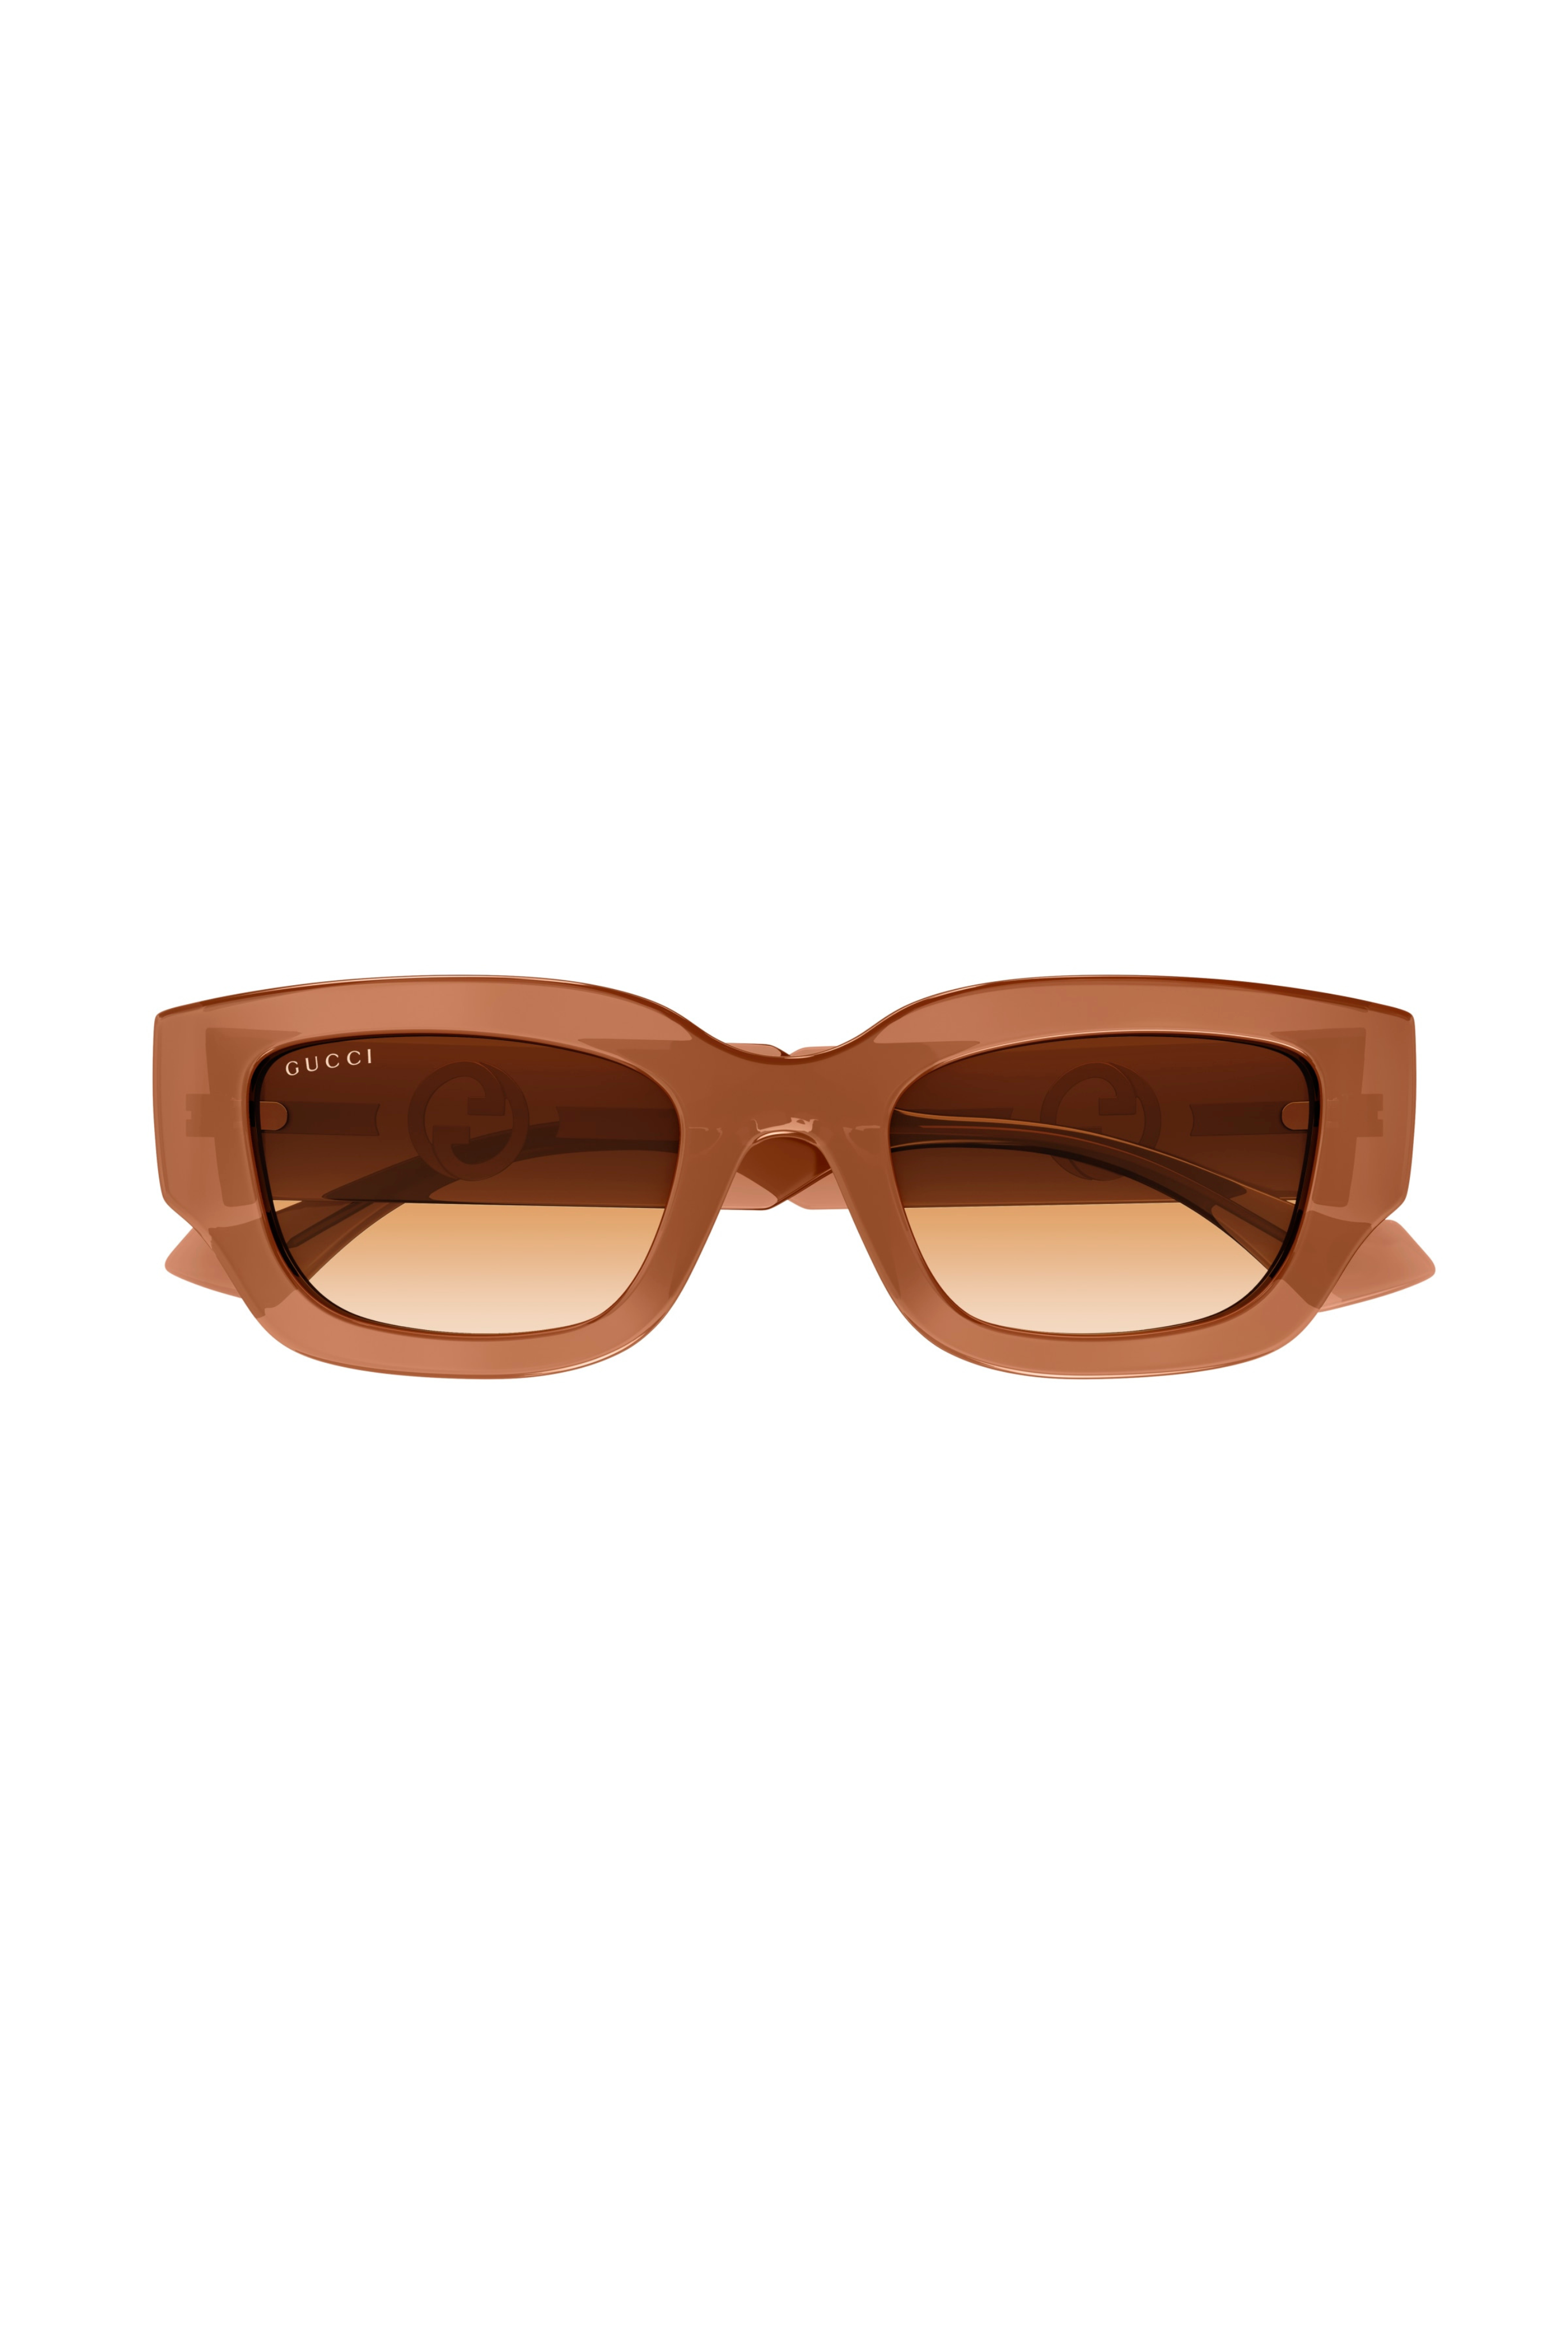 GUCCI Transparent Oval Frame Sunglasses